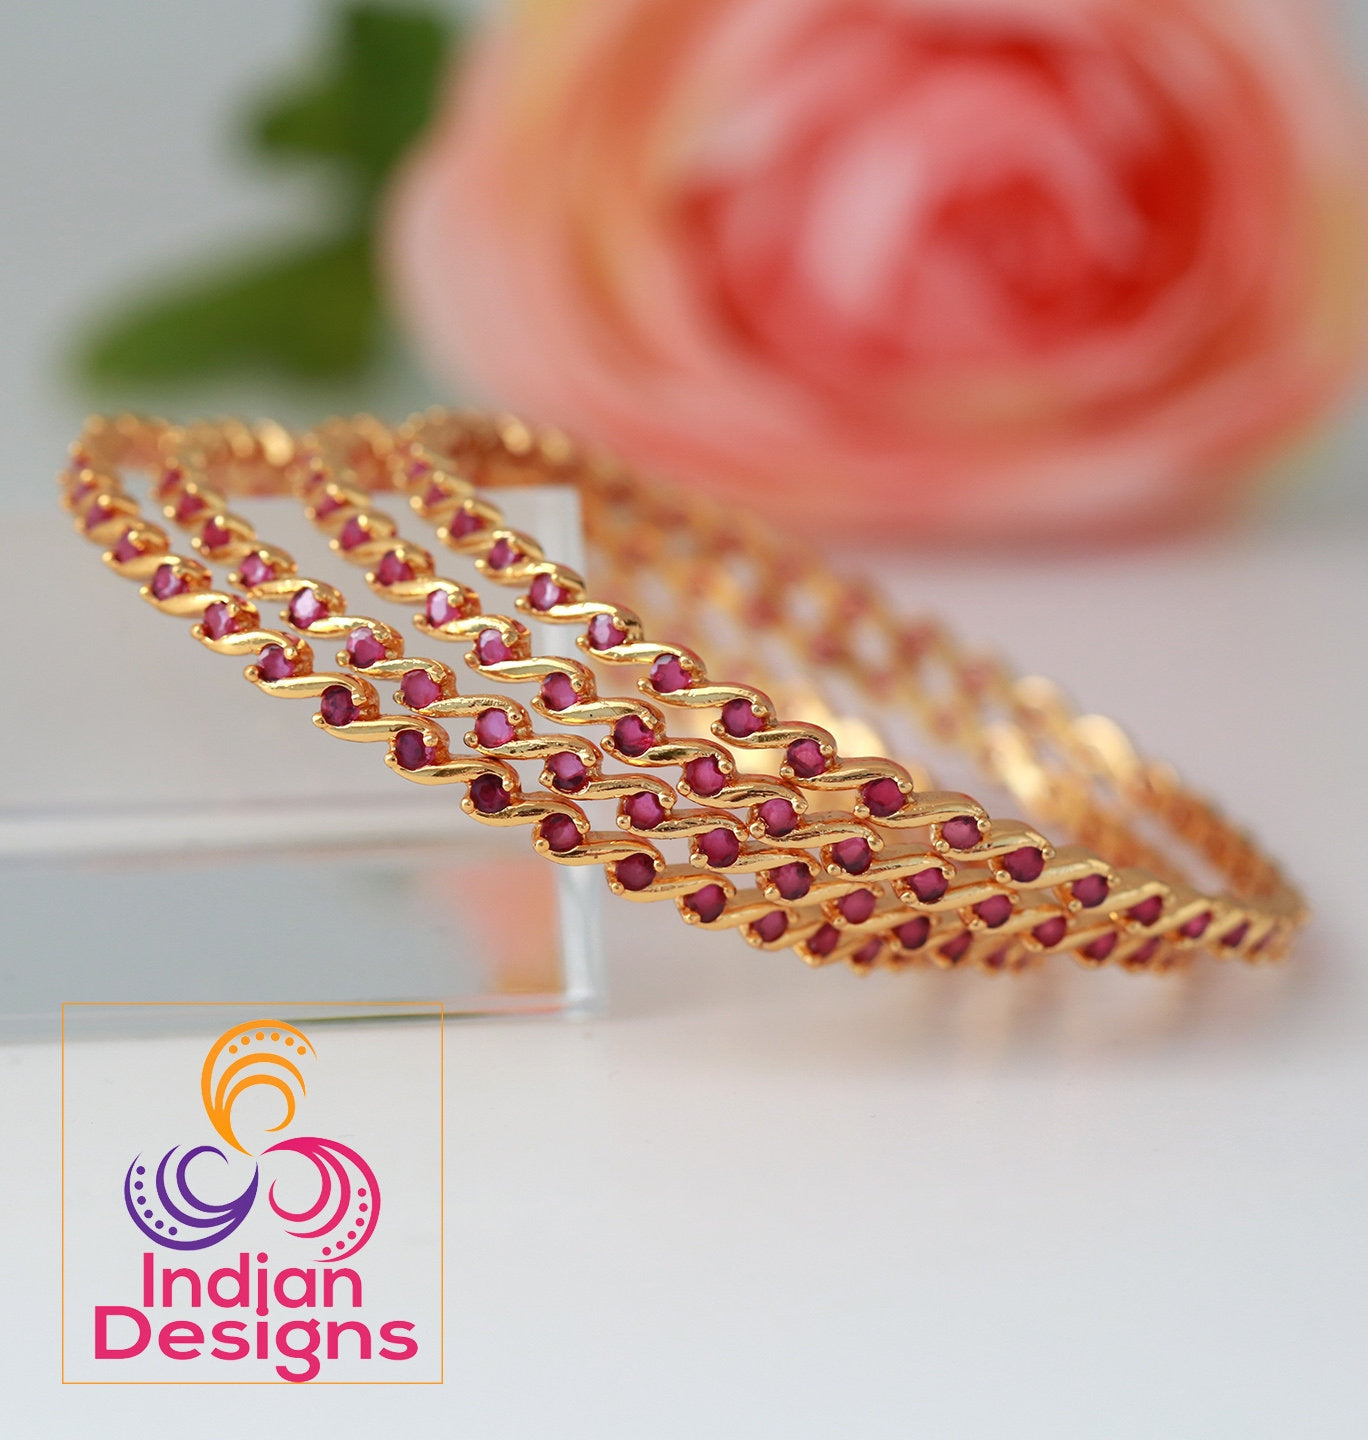 Stylish Zig Zag Design set bangles | 22k gold plated AD stone bangles | Gold plated American diamond bangles | Small ruby stone bangles